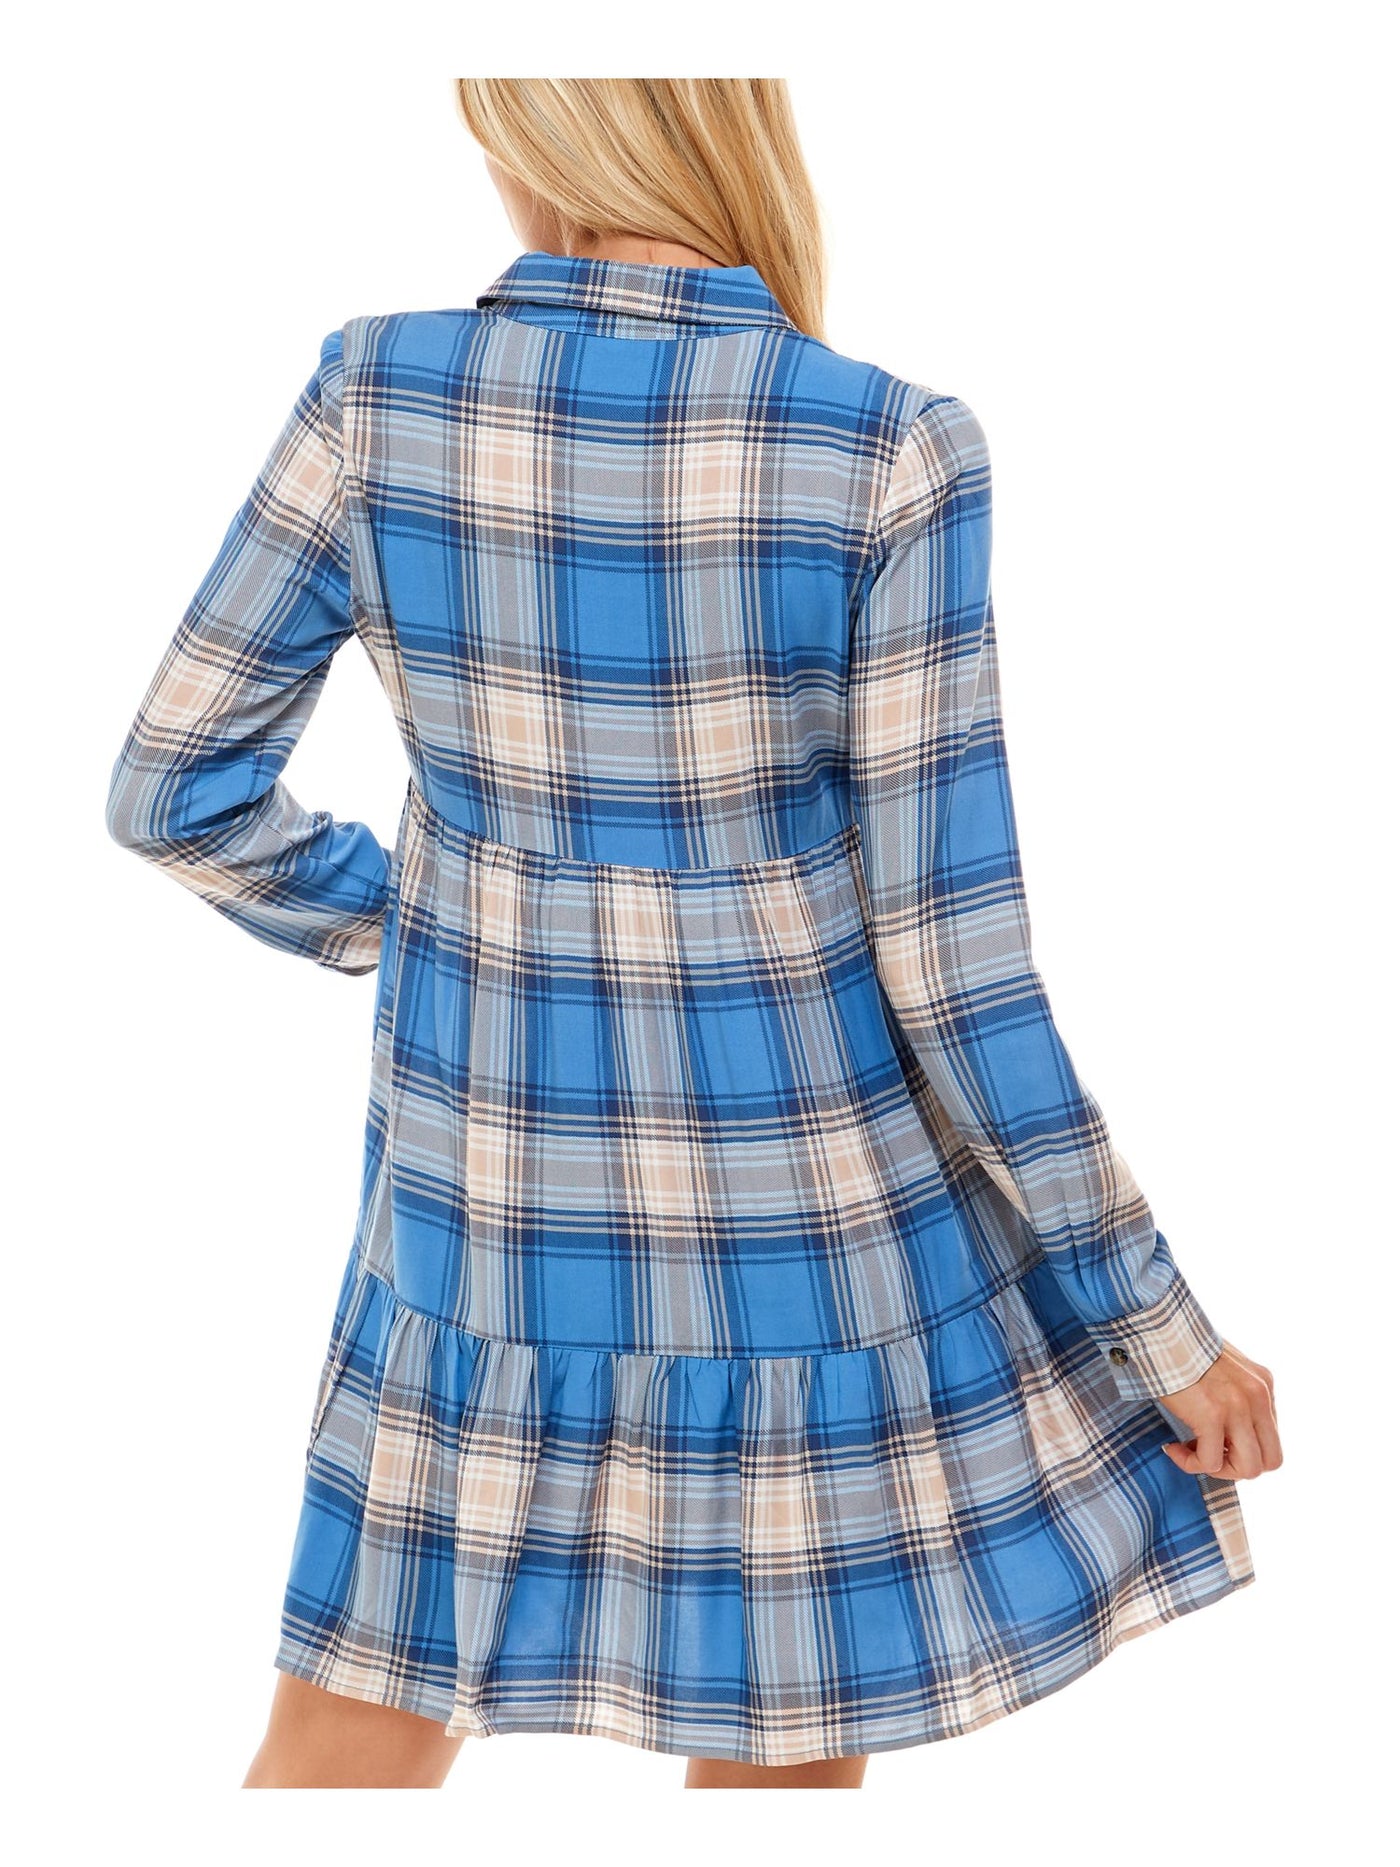 ULTRA FLIRT Womens Blue Plaid Cuffed Sleeve Point Collar Short Fit + Flare Dress Juniors XS